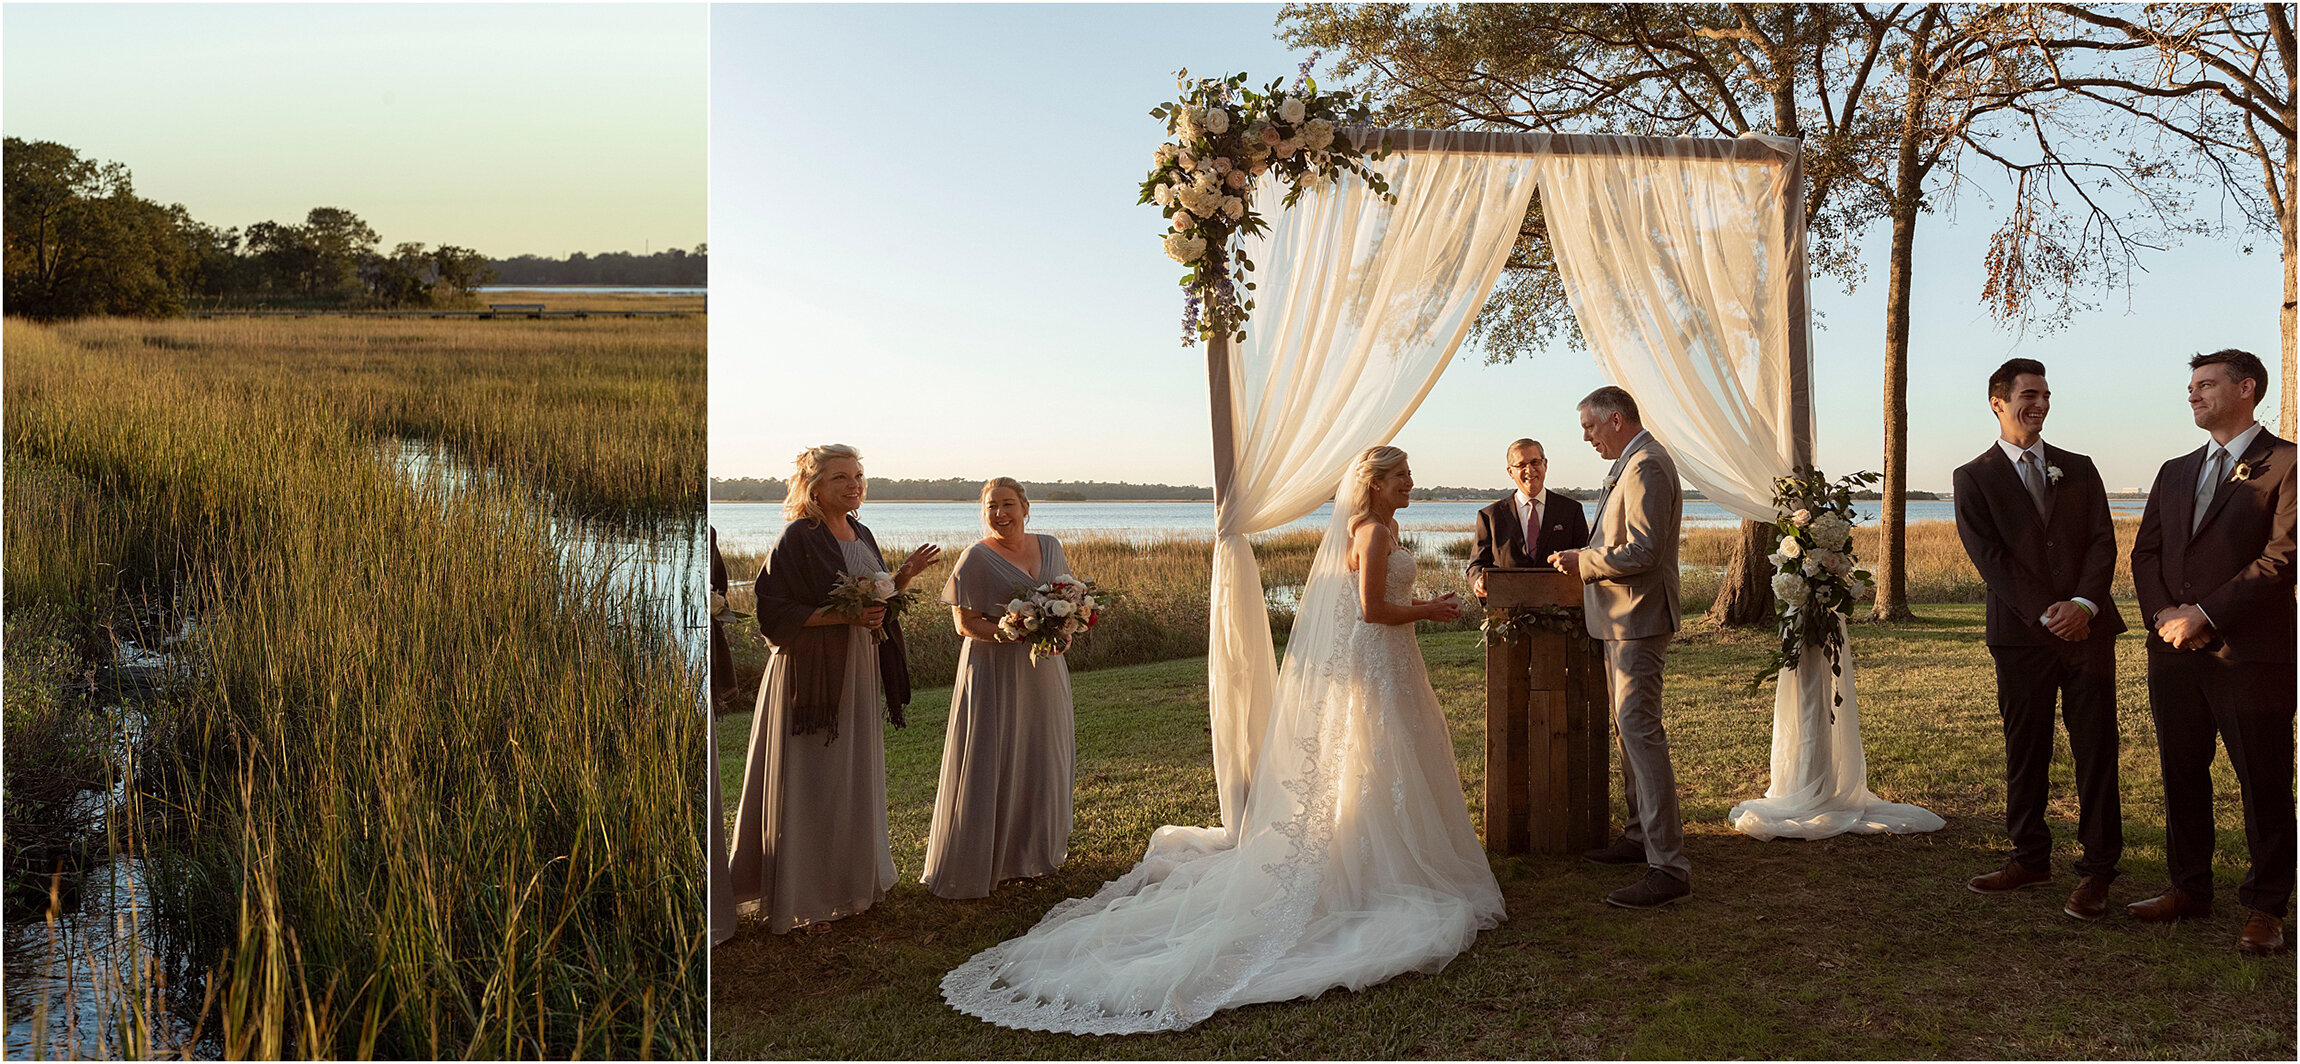 ©FianderFoto_Charleston South Carolina_Wedding Photographer_DD_147.jpg